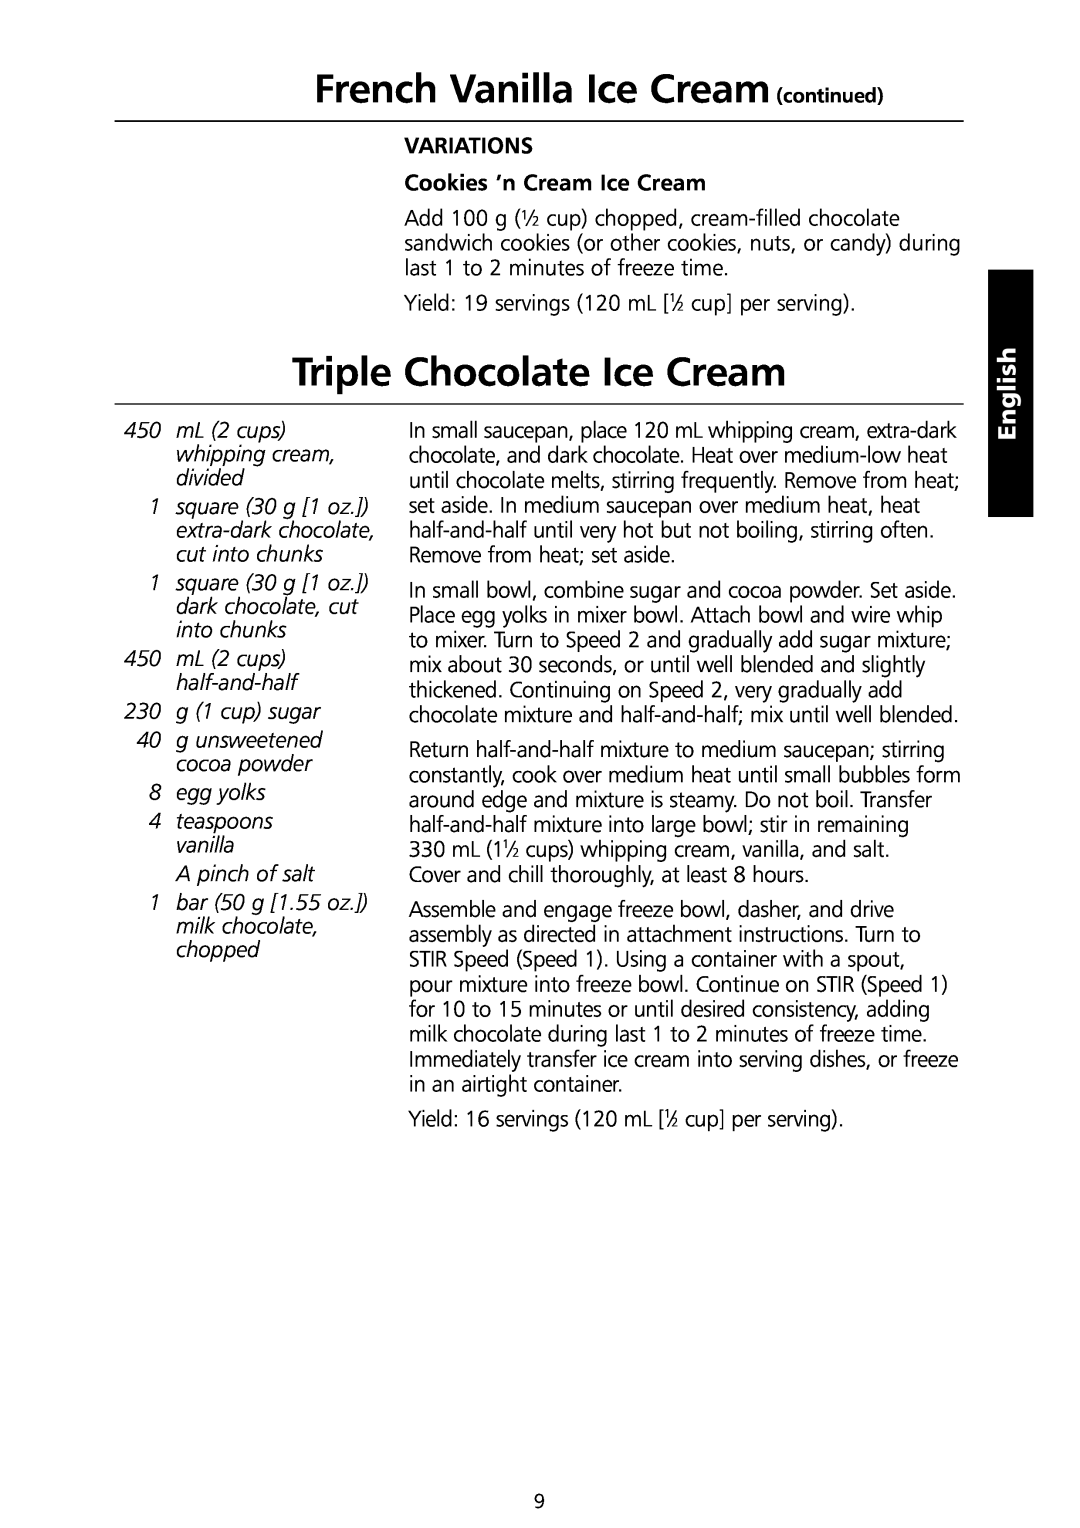 KitchenAid 5KICA0WH manual continued French Vanilla Ice Cream continued, Triple Chocolate Ice Cream, English 